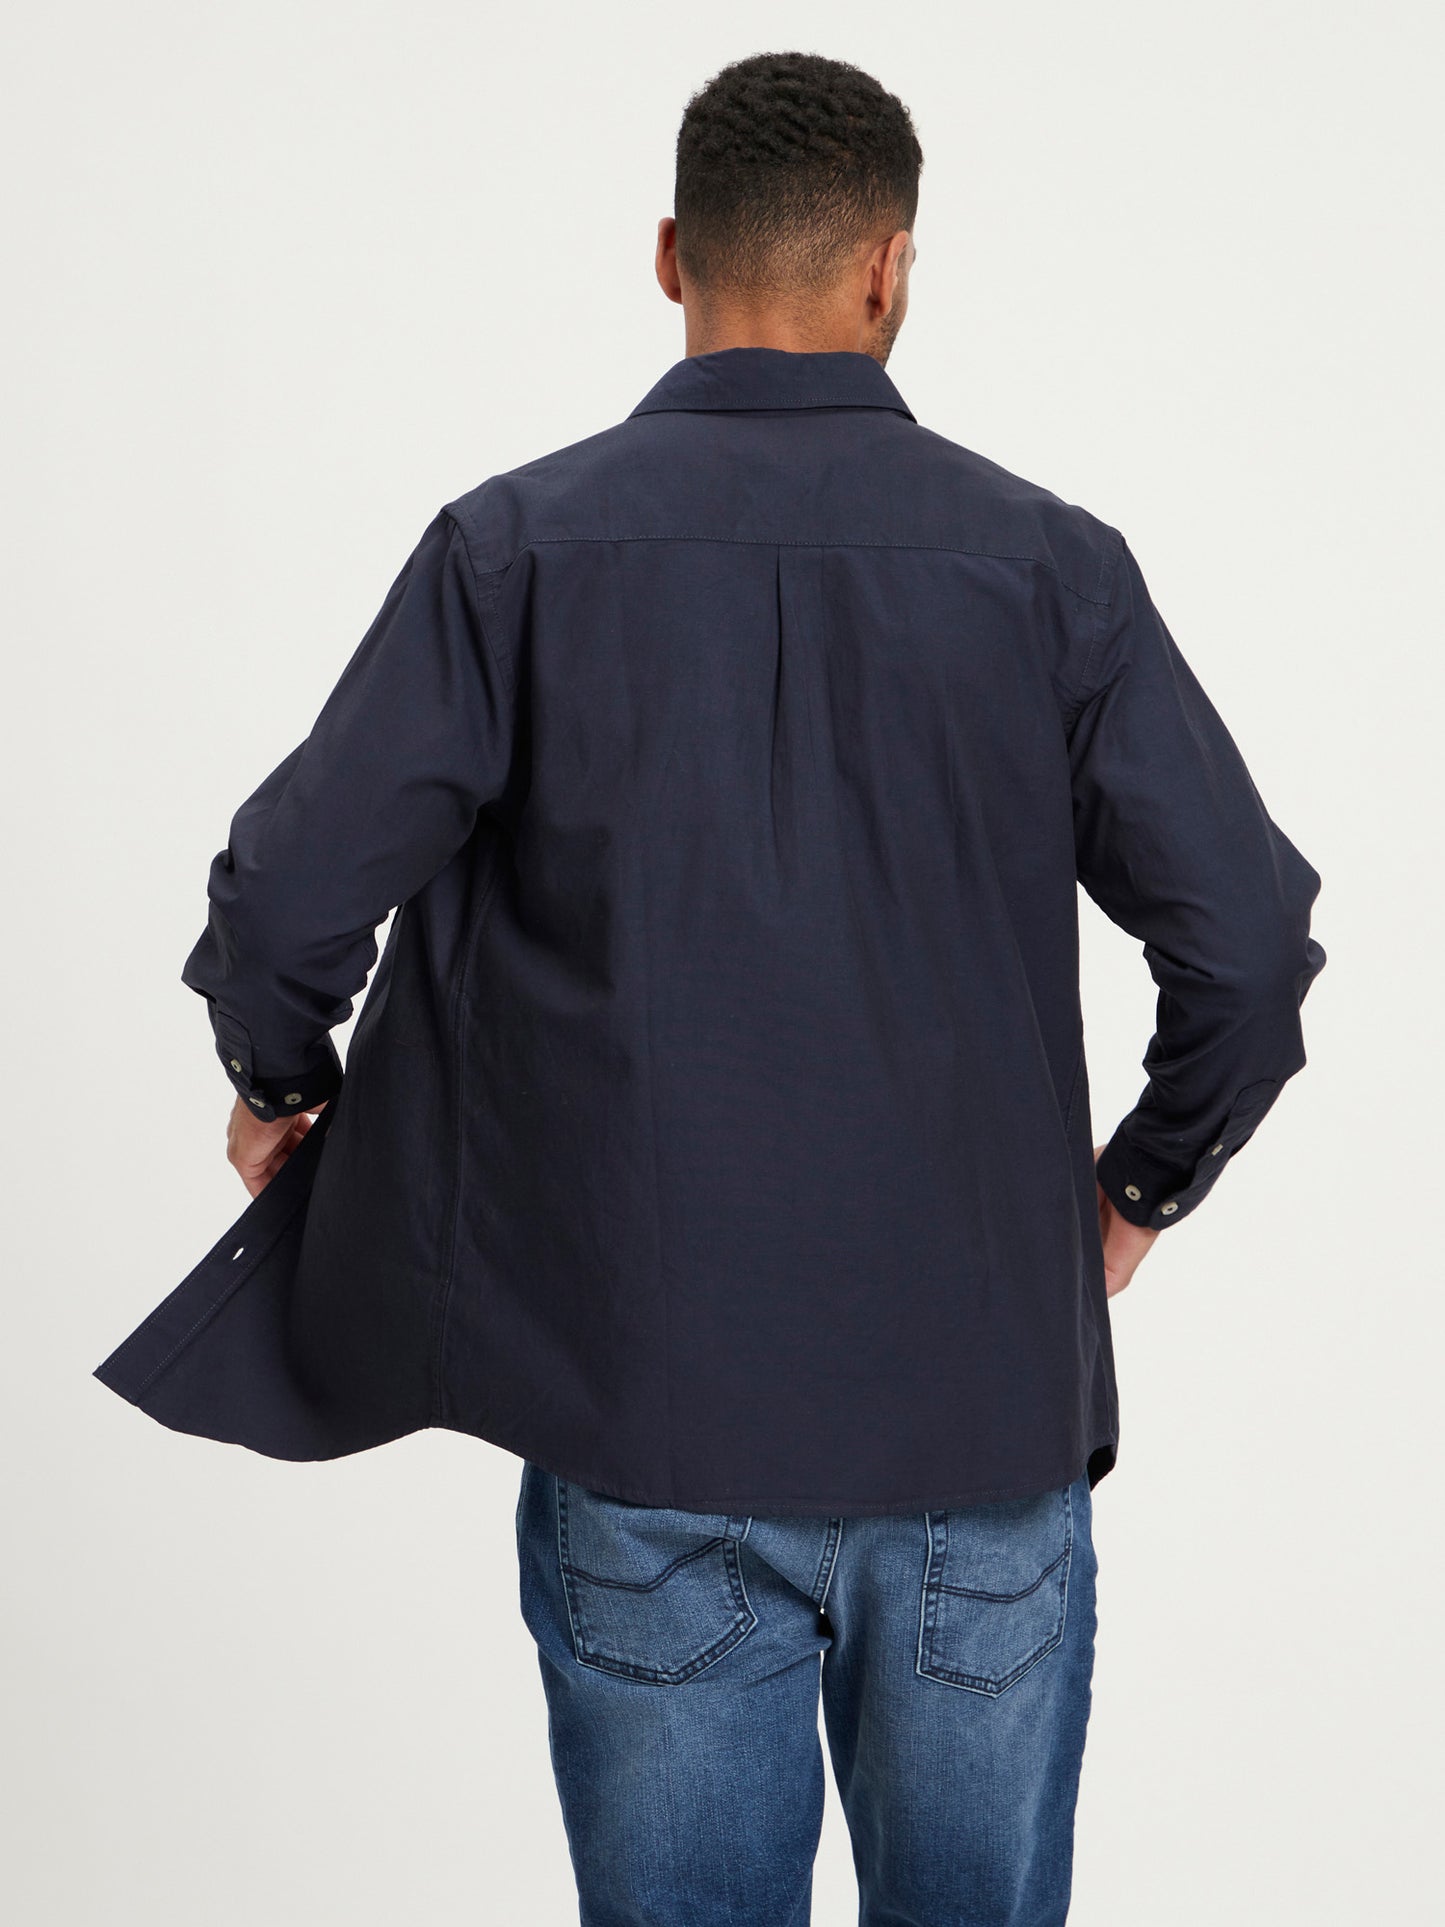 Men's regular long-sleeved shirt navy blue